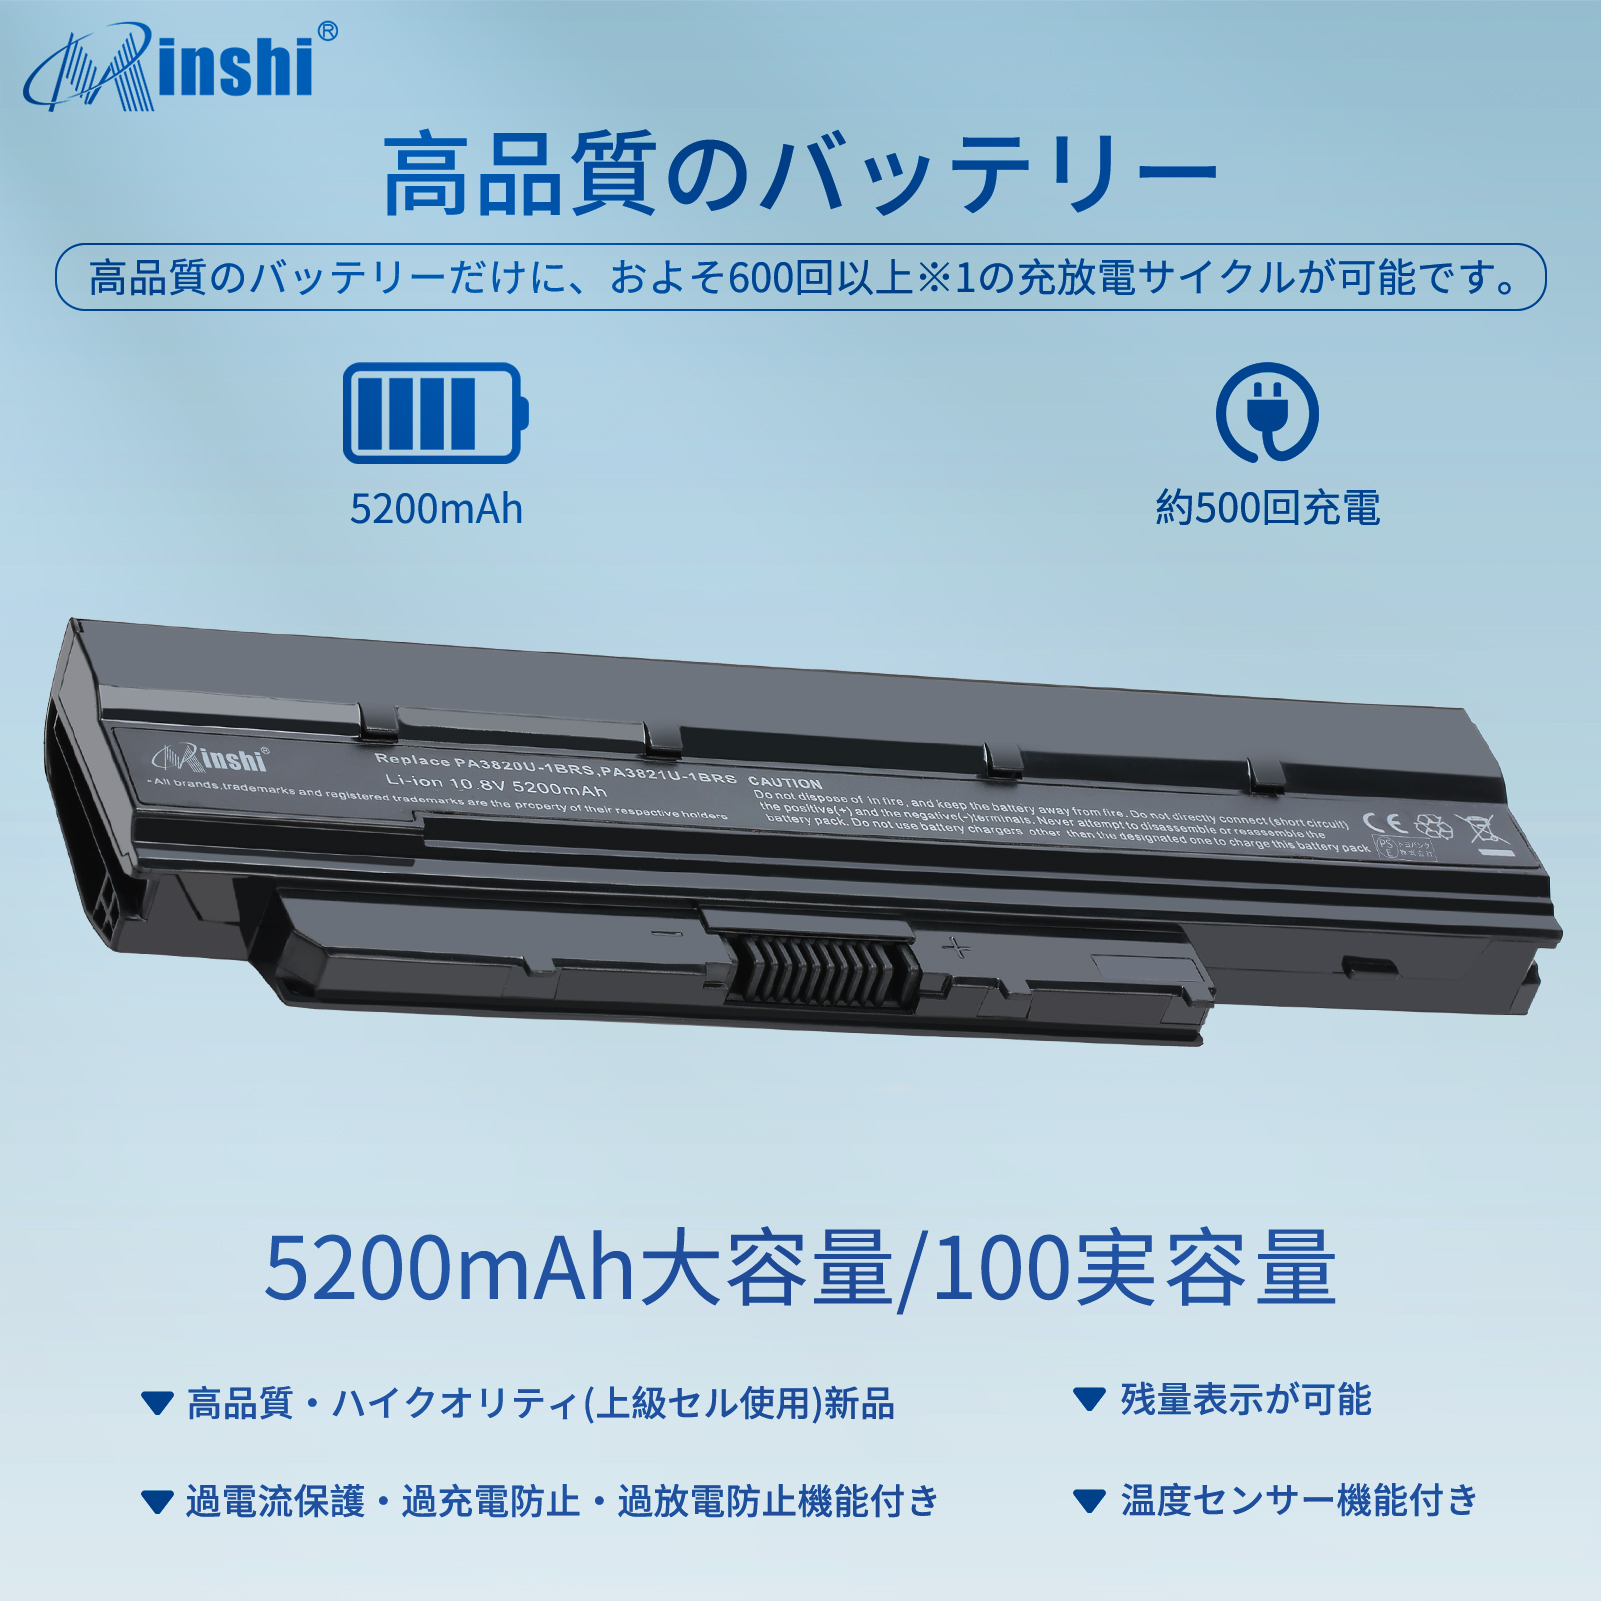  minshi  東芝Dynabook N300 02AD 対応 互換バッテリー  交換用バッテリー